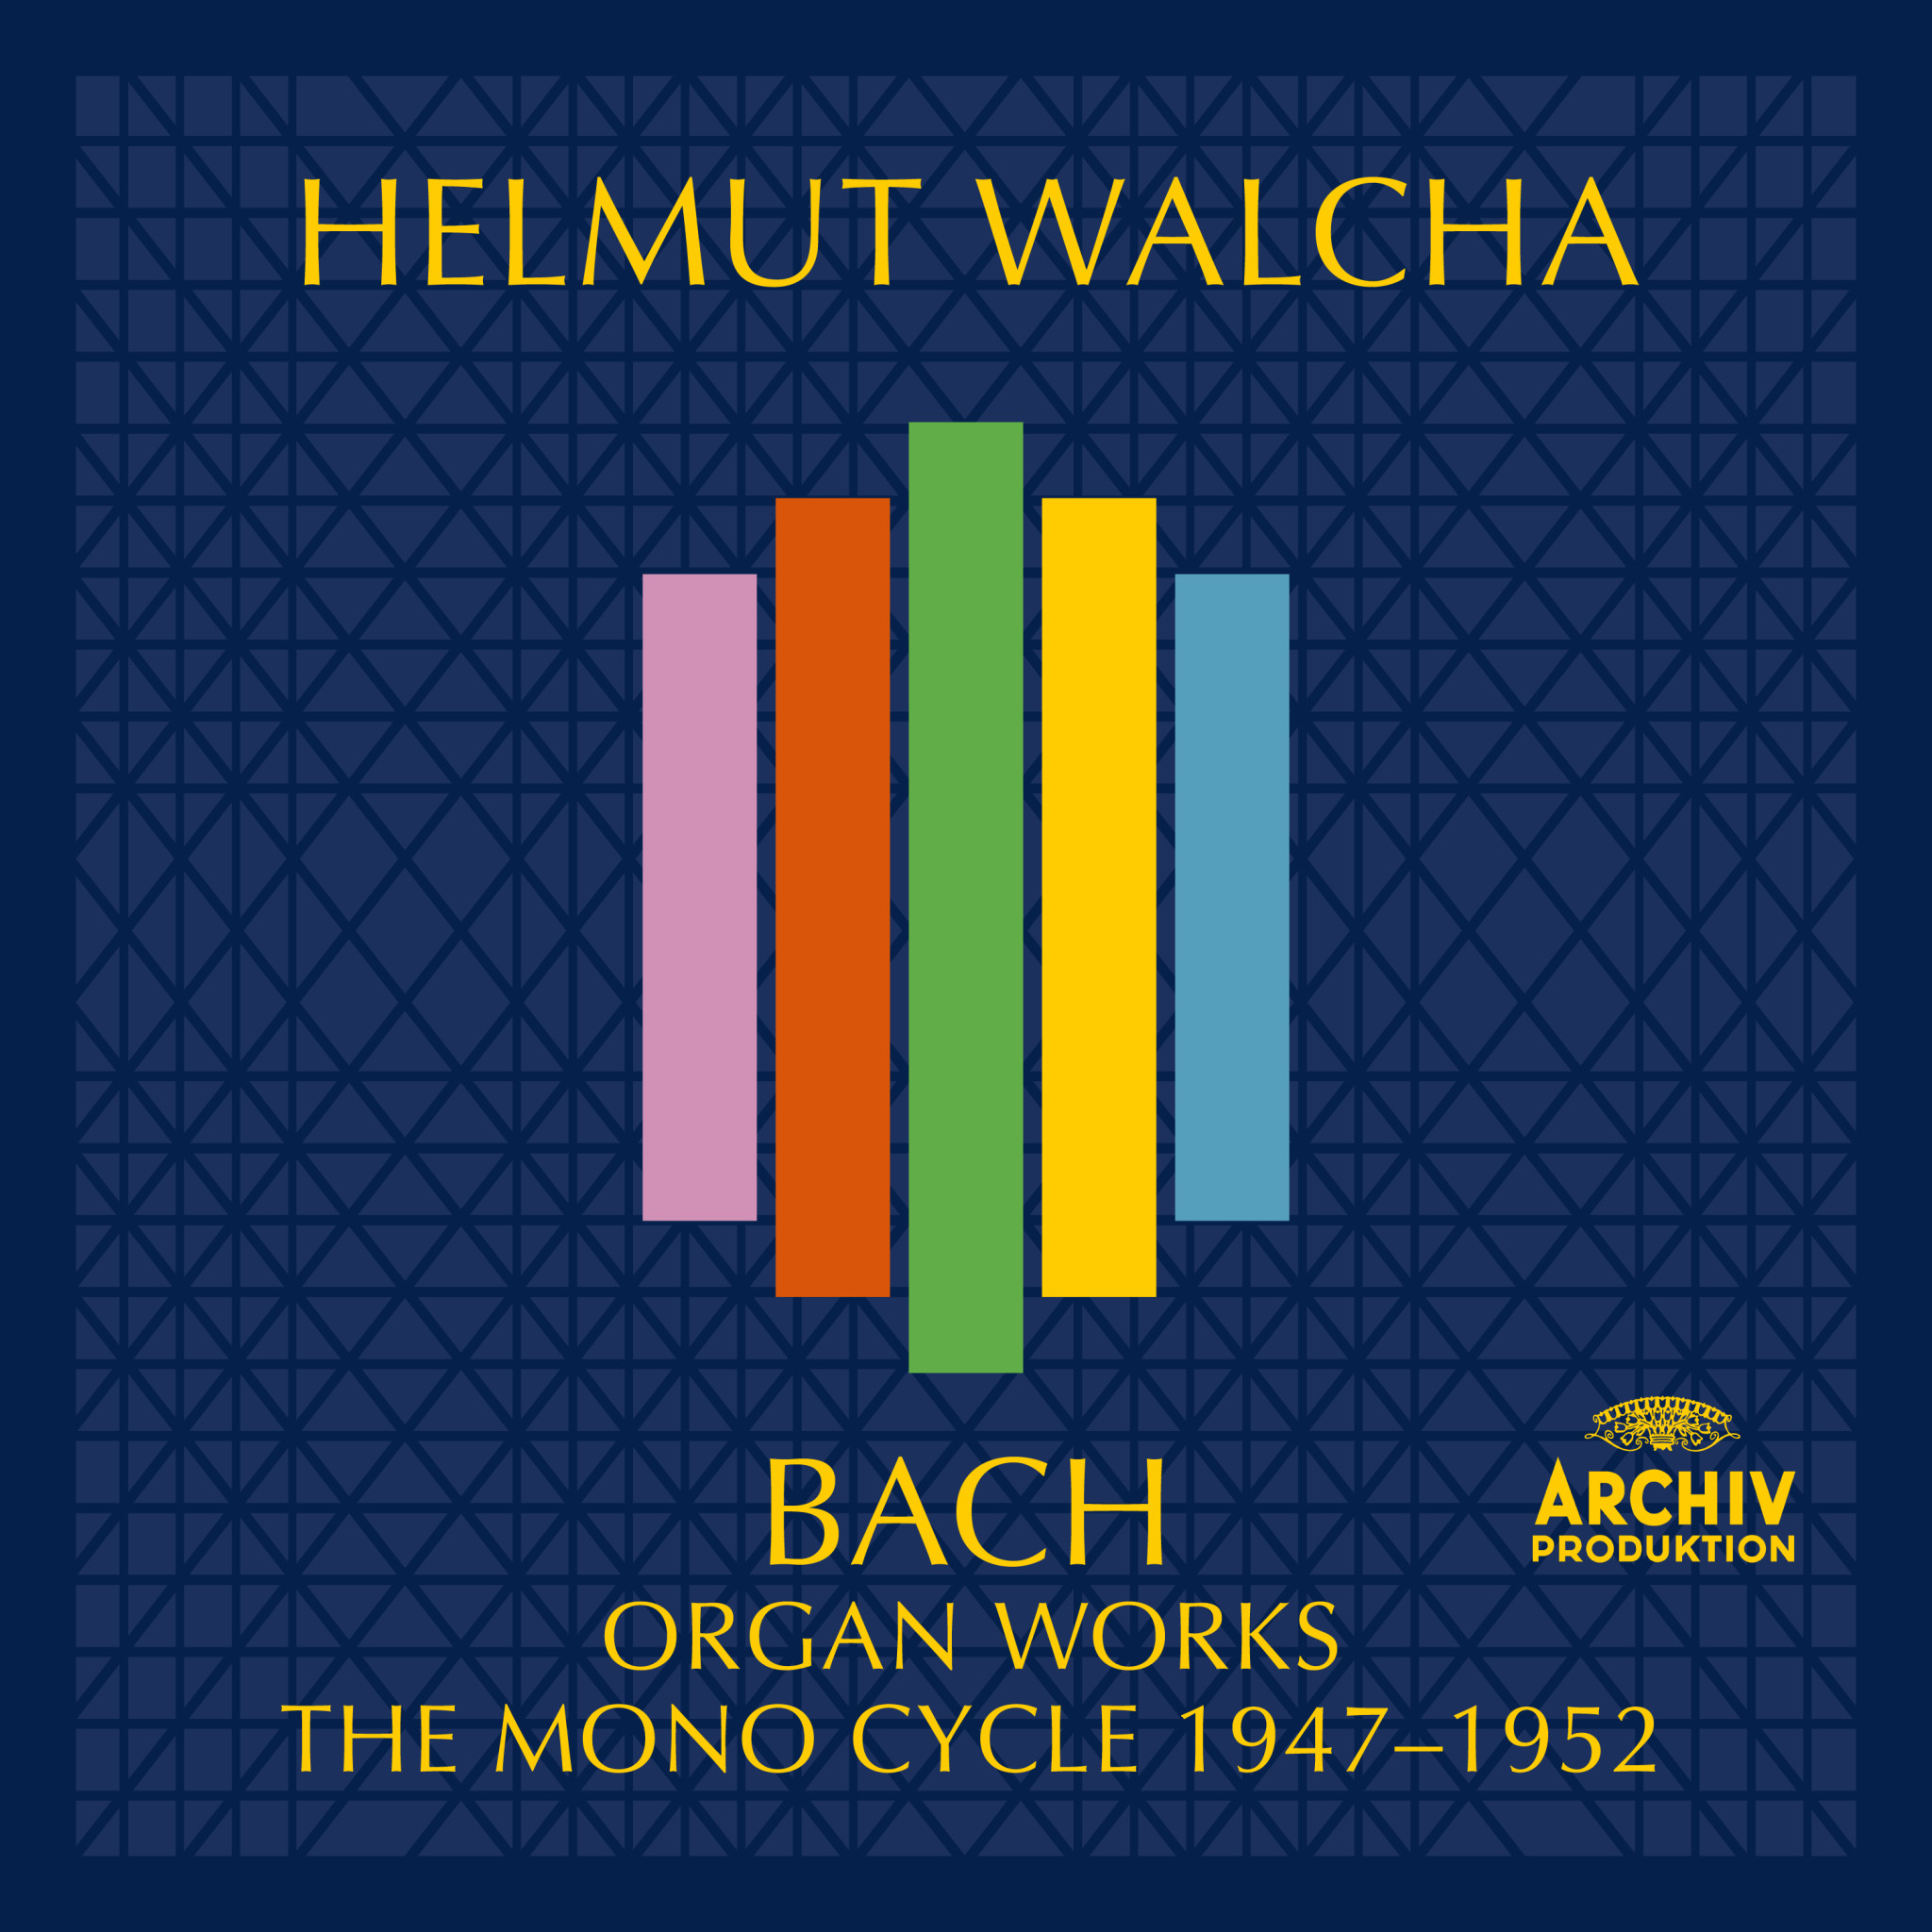 Helmut Walcha - Bach, J.S.: Organ Works - The Mono Cycle 1947 - 1952 eAlbum Cover